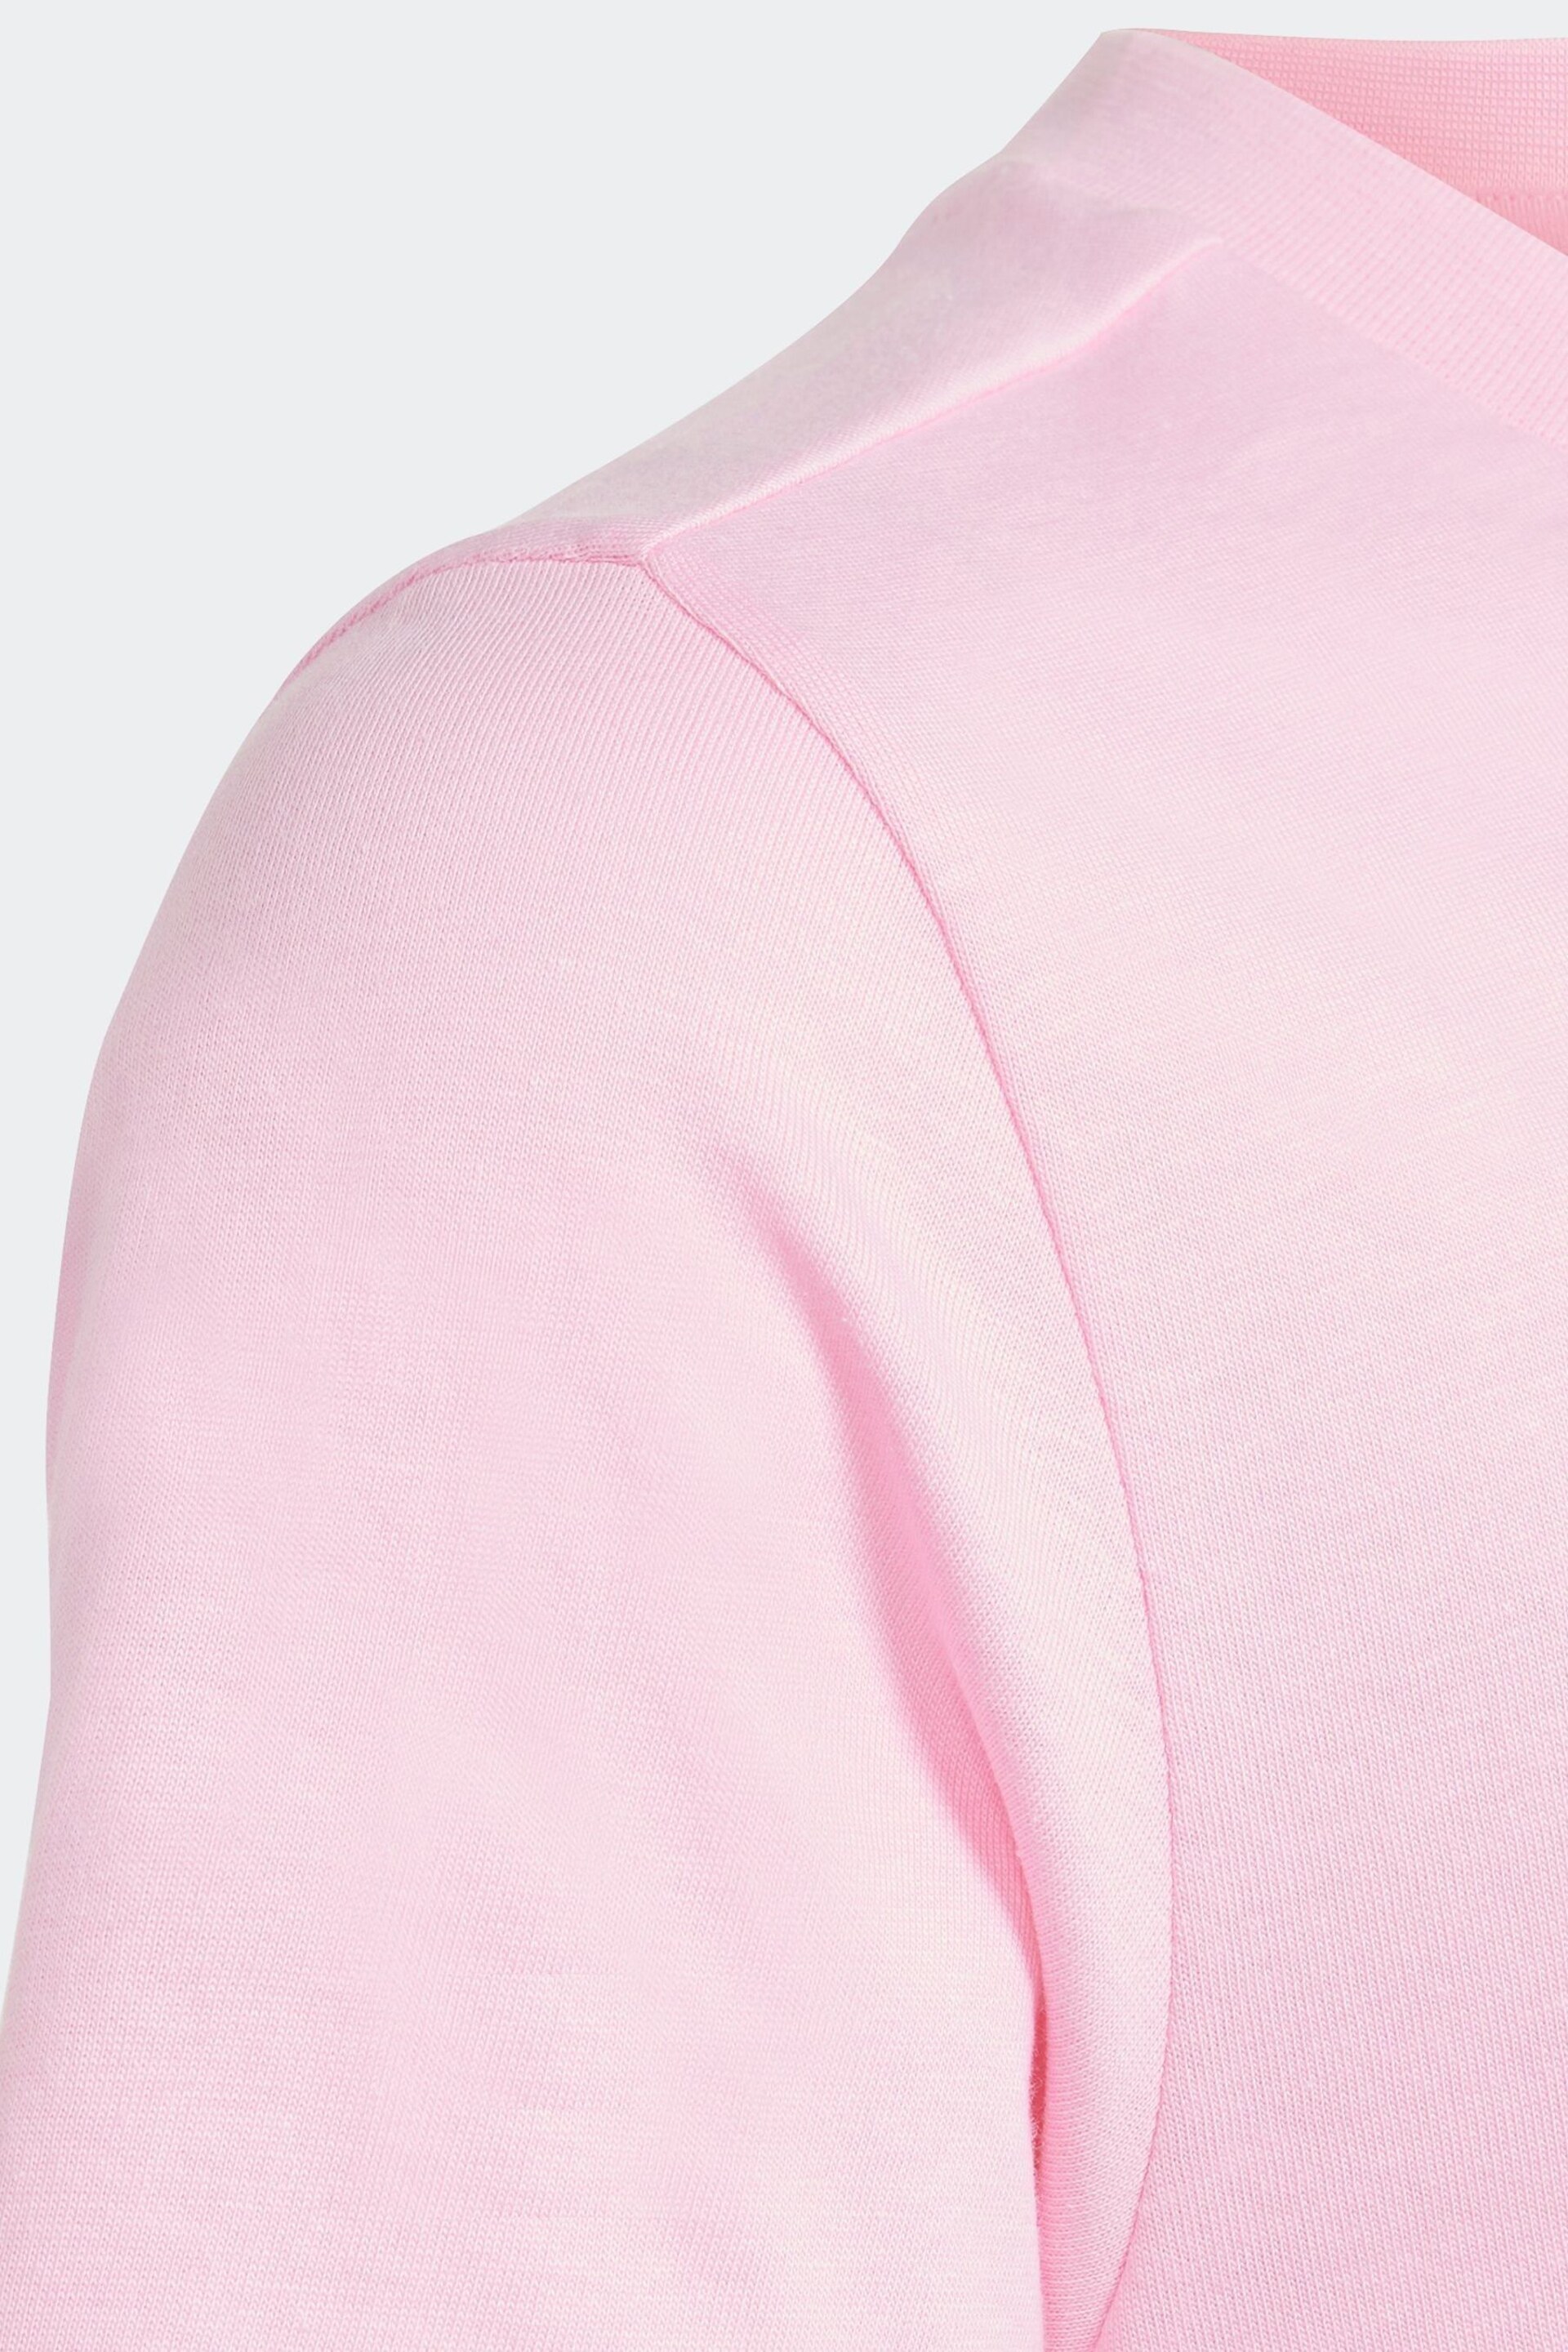 adidas Originals Light Pink Adicolor T-Shirt - Image 4 of 5